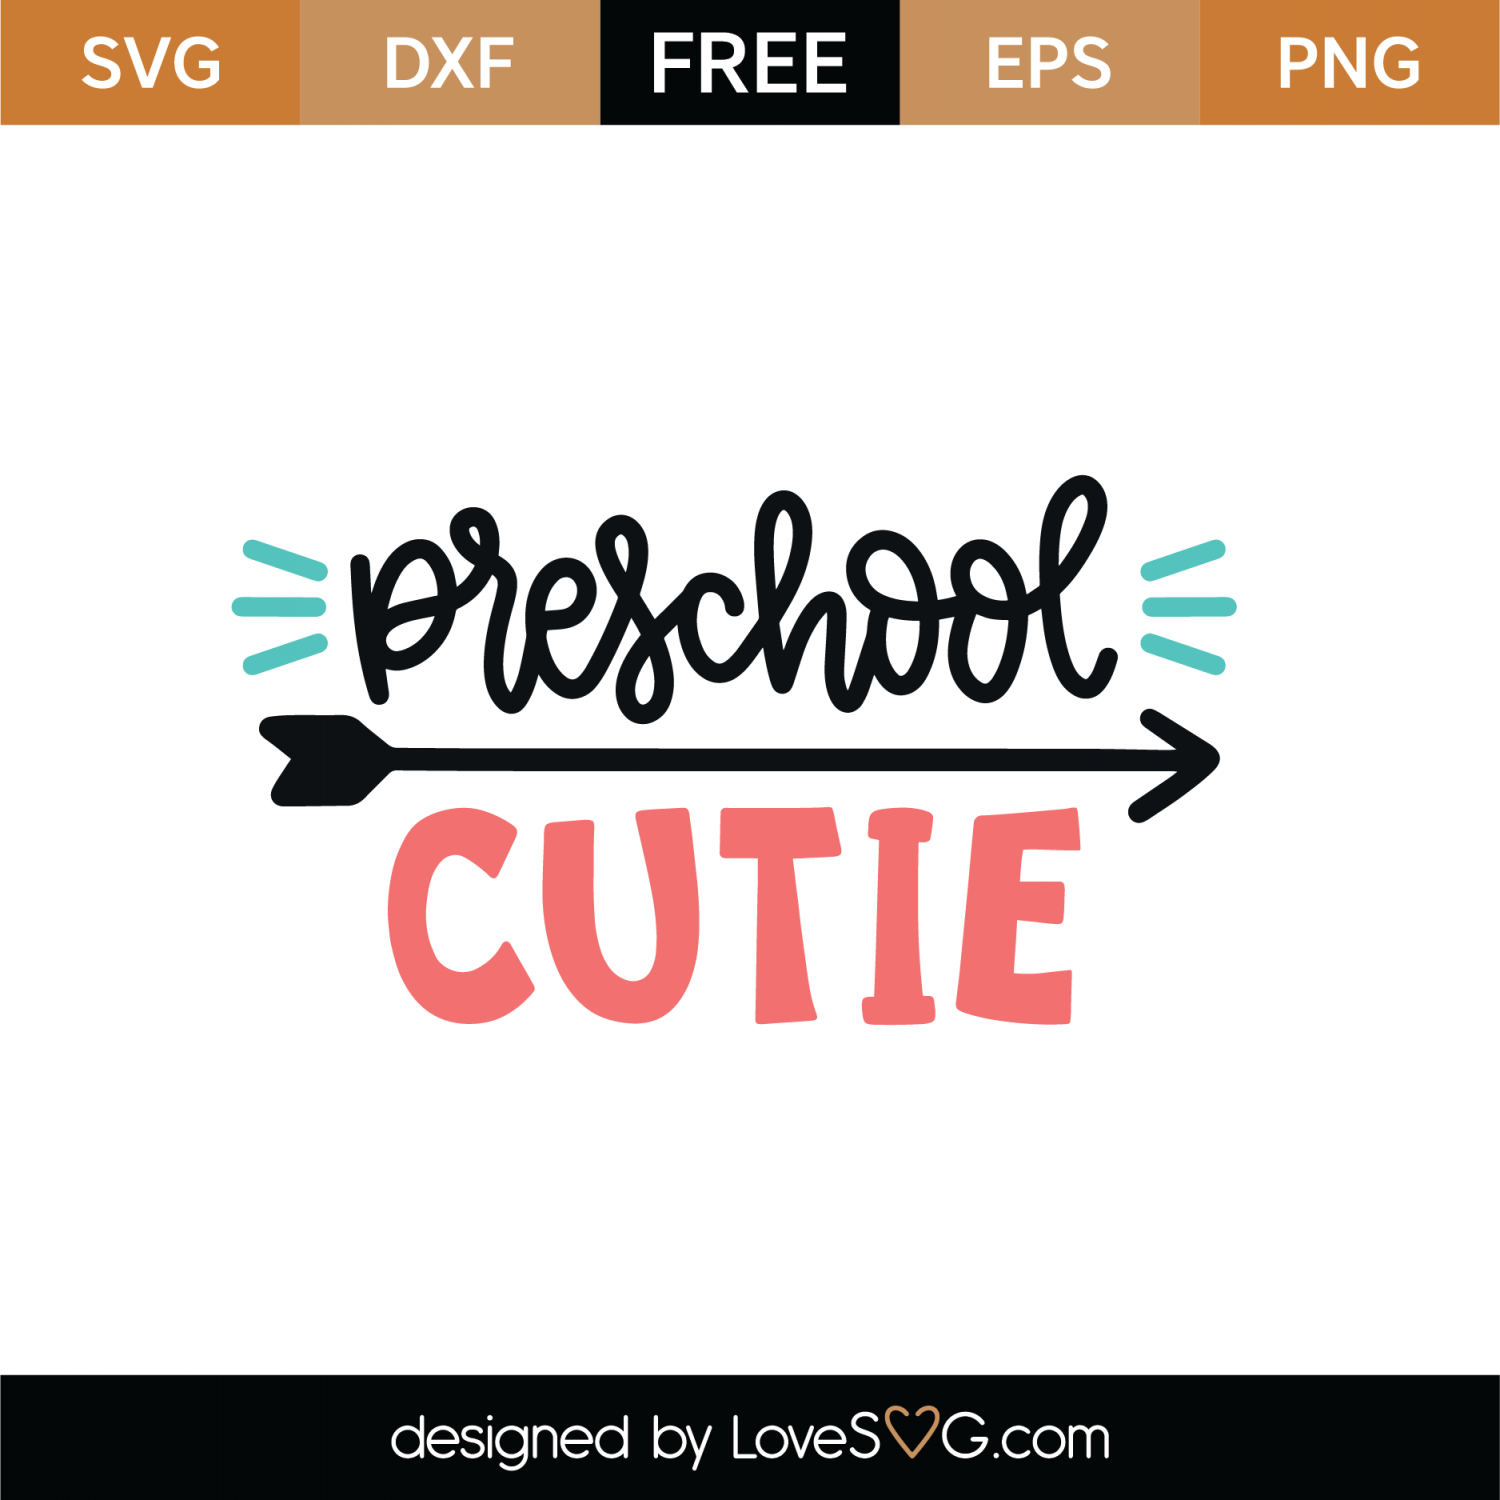 Download Free Preschool Cutie SVG Cut File | Lovesvg.com